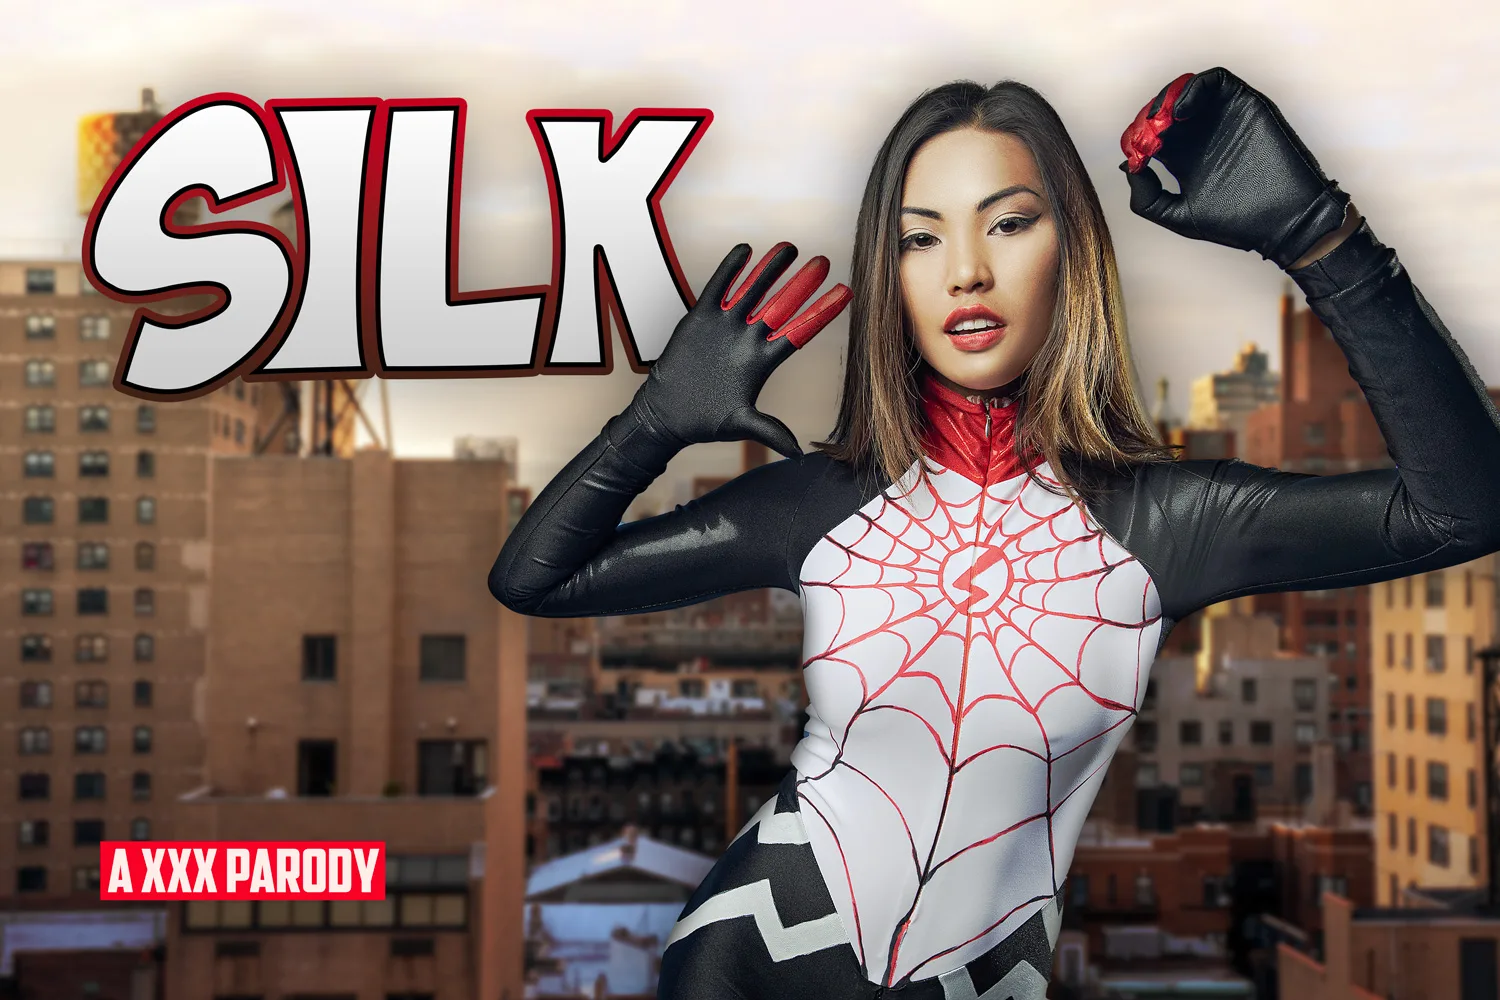 [2022-11-21] Silk A XXX Parody - RealVR